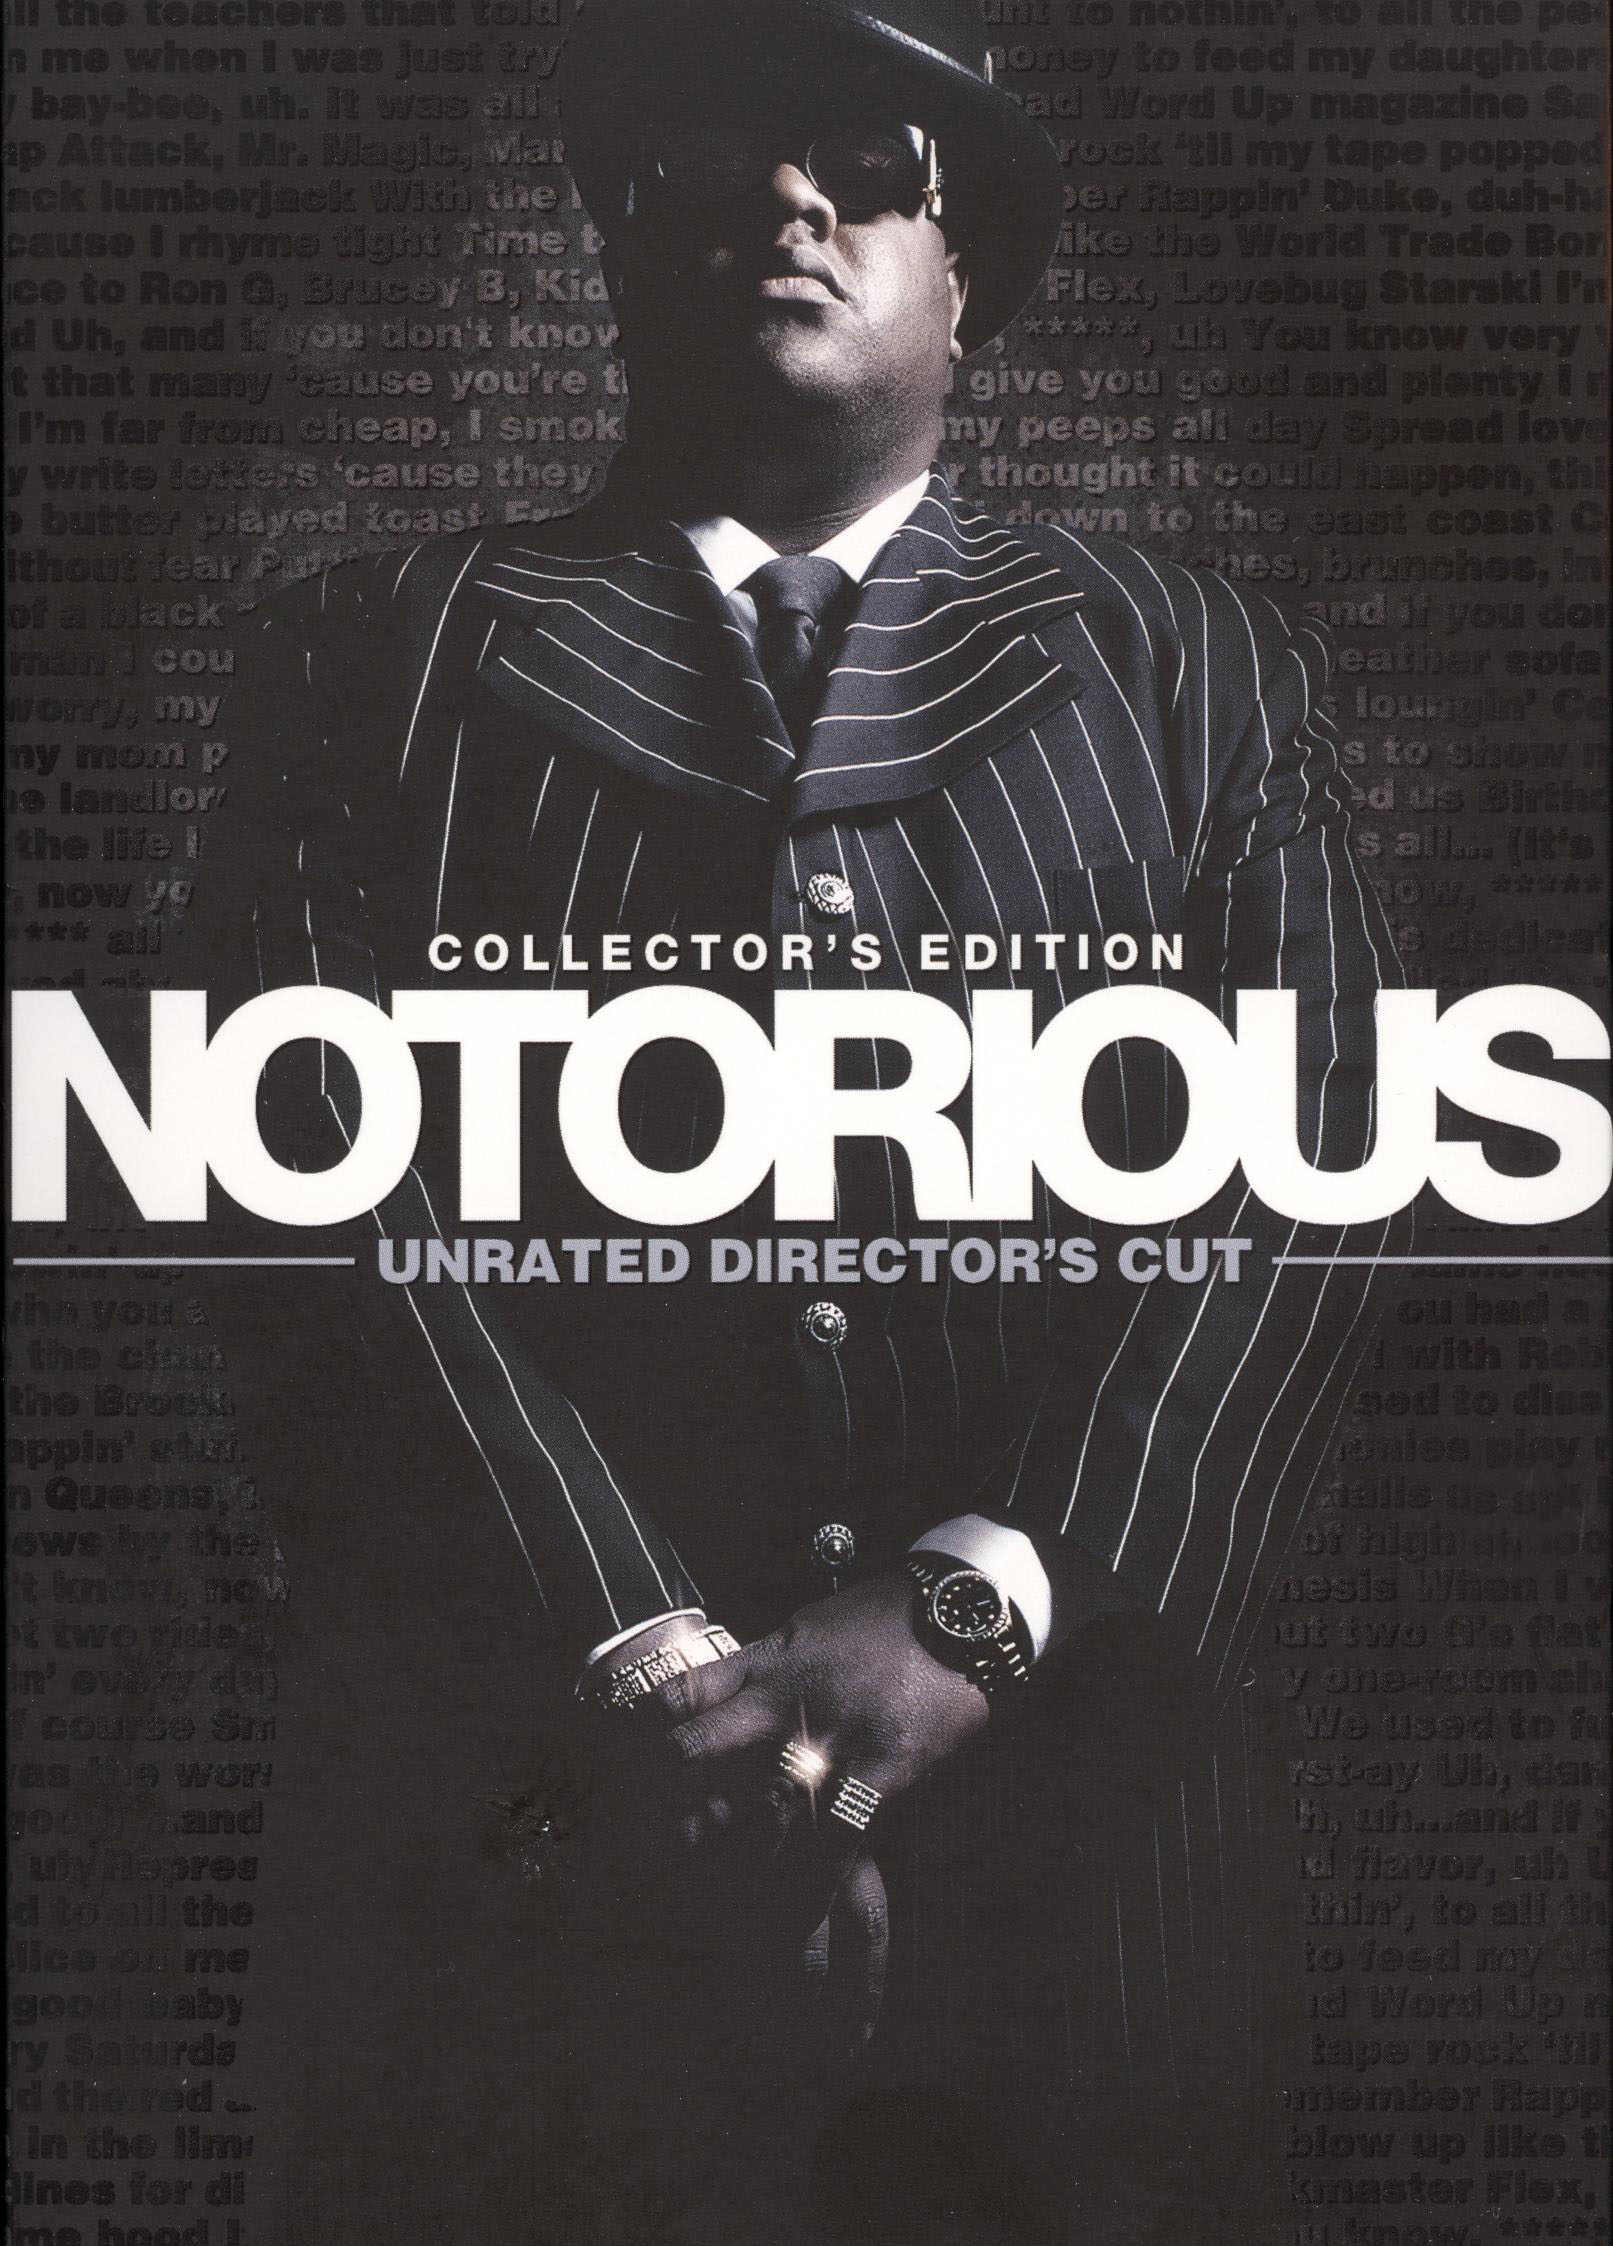 Notorious (2009) - Soundtracks - IMDb